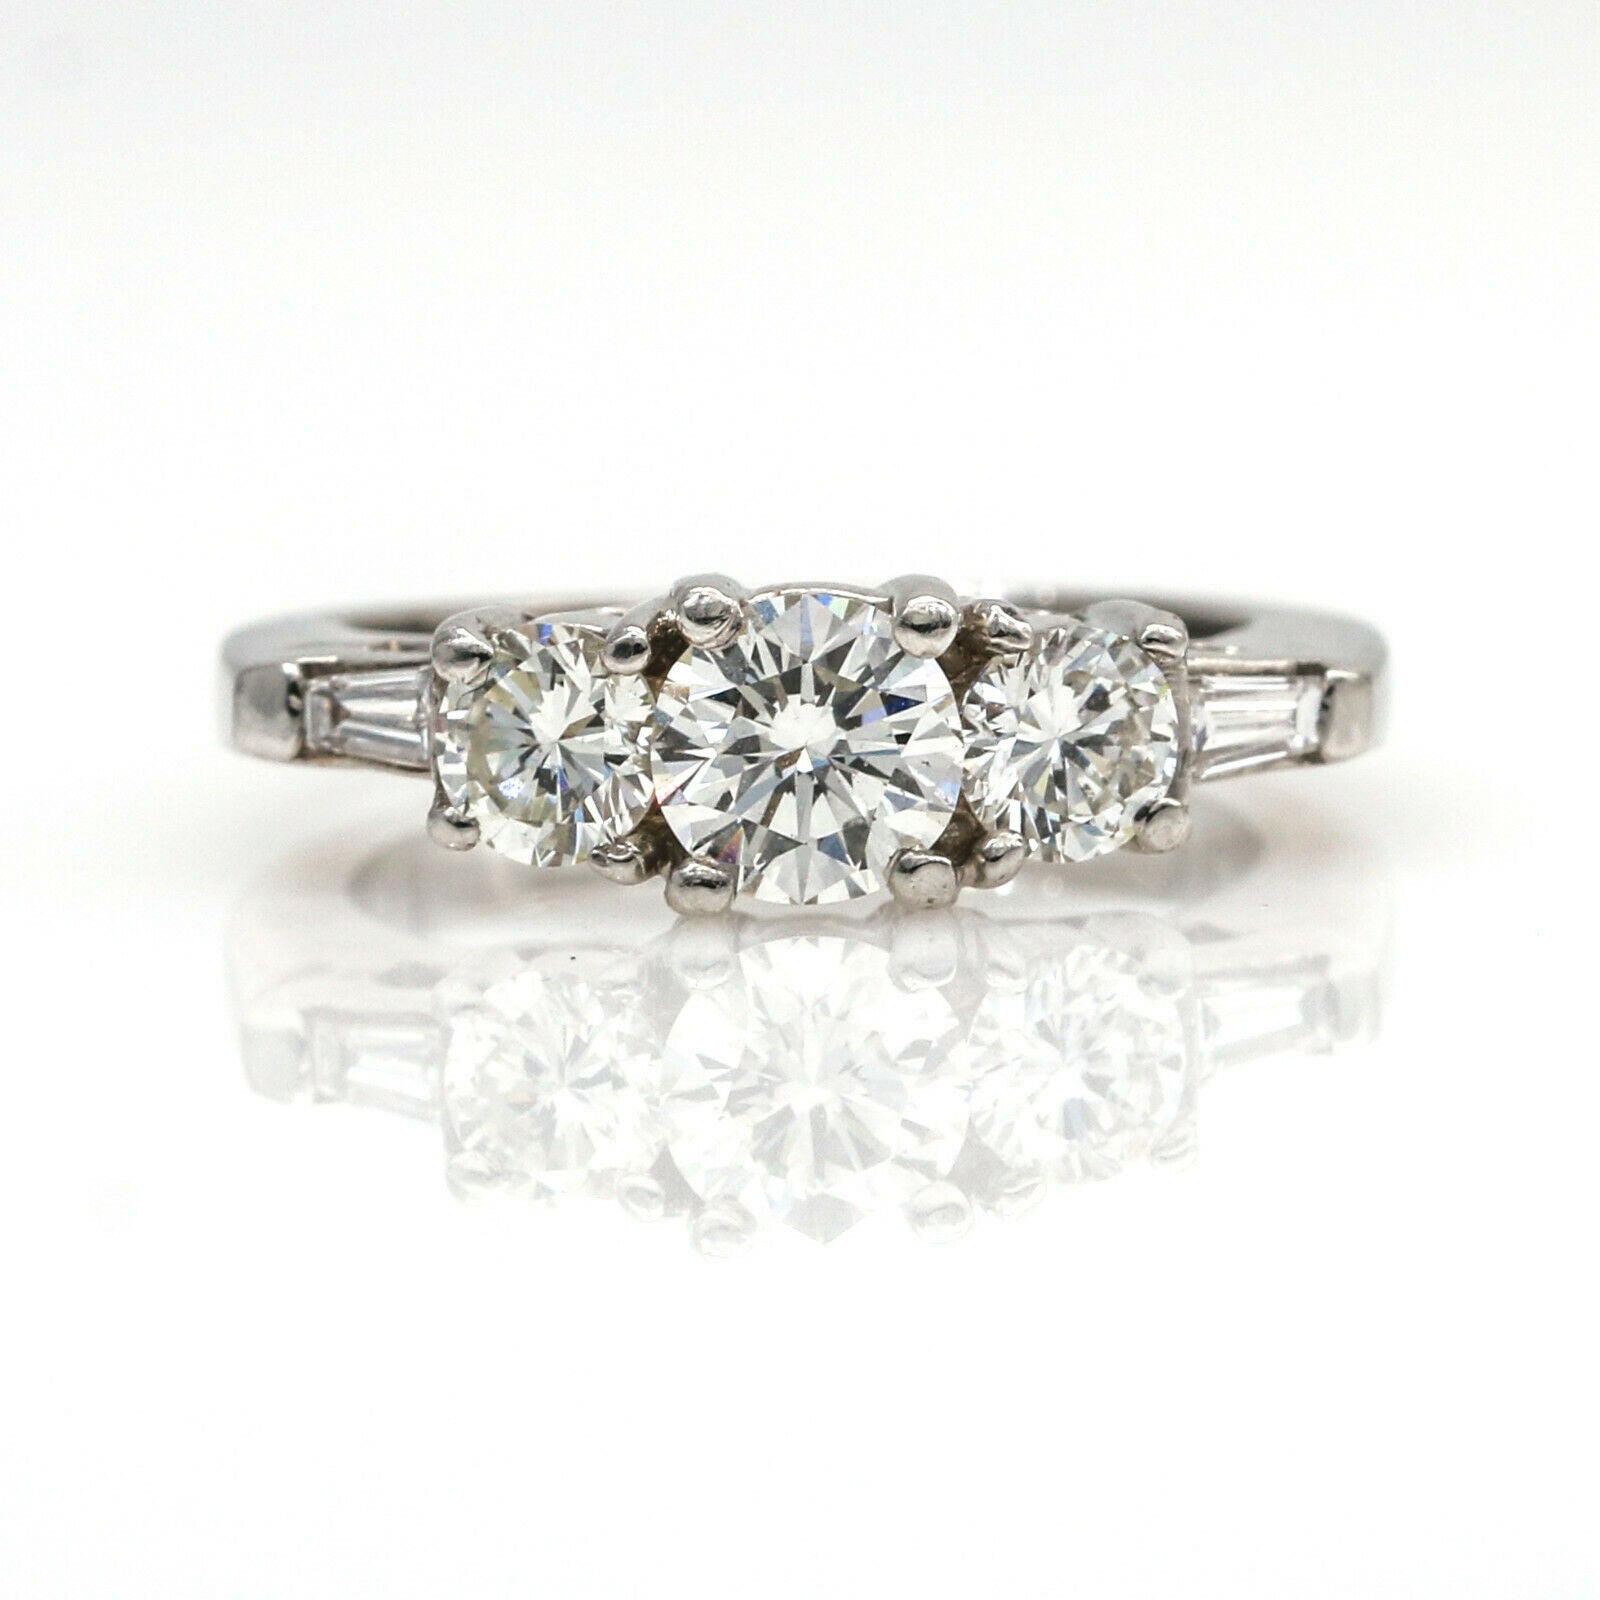 1.45 cttw Diamond Three-Stone Engagement Ring in Platinum